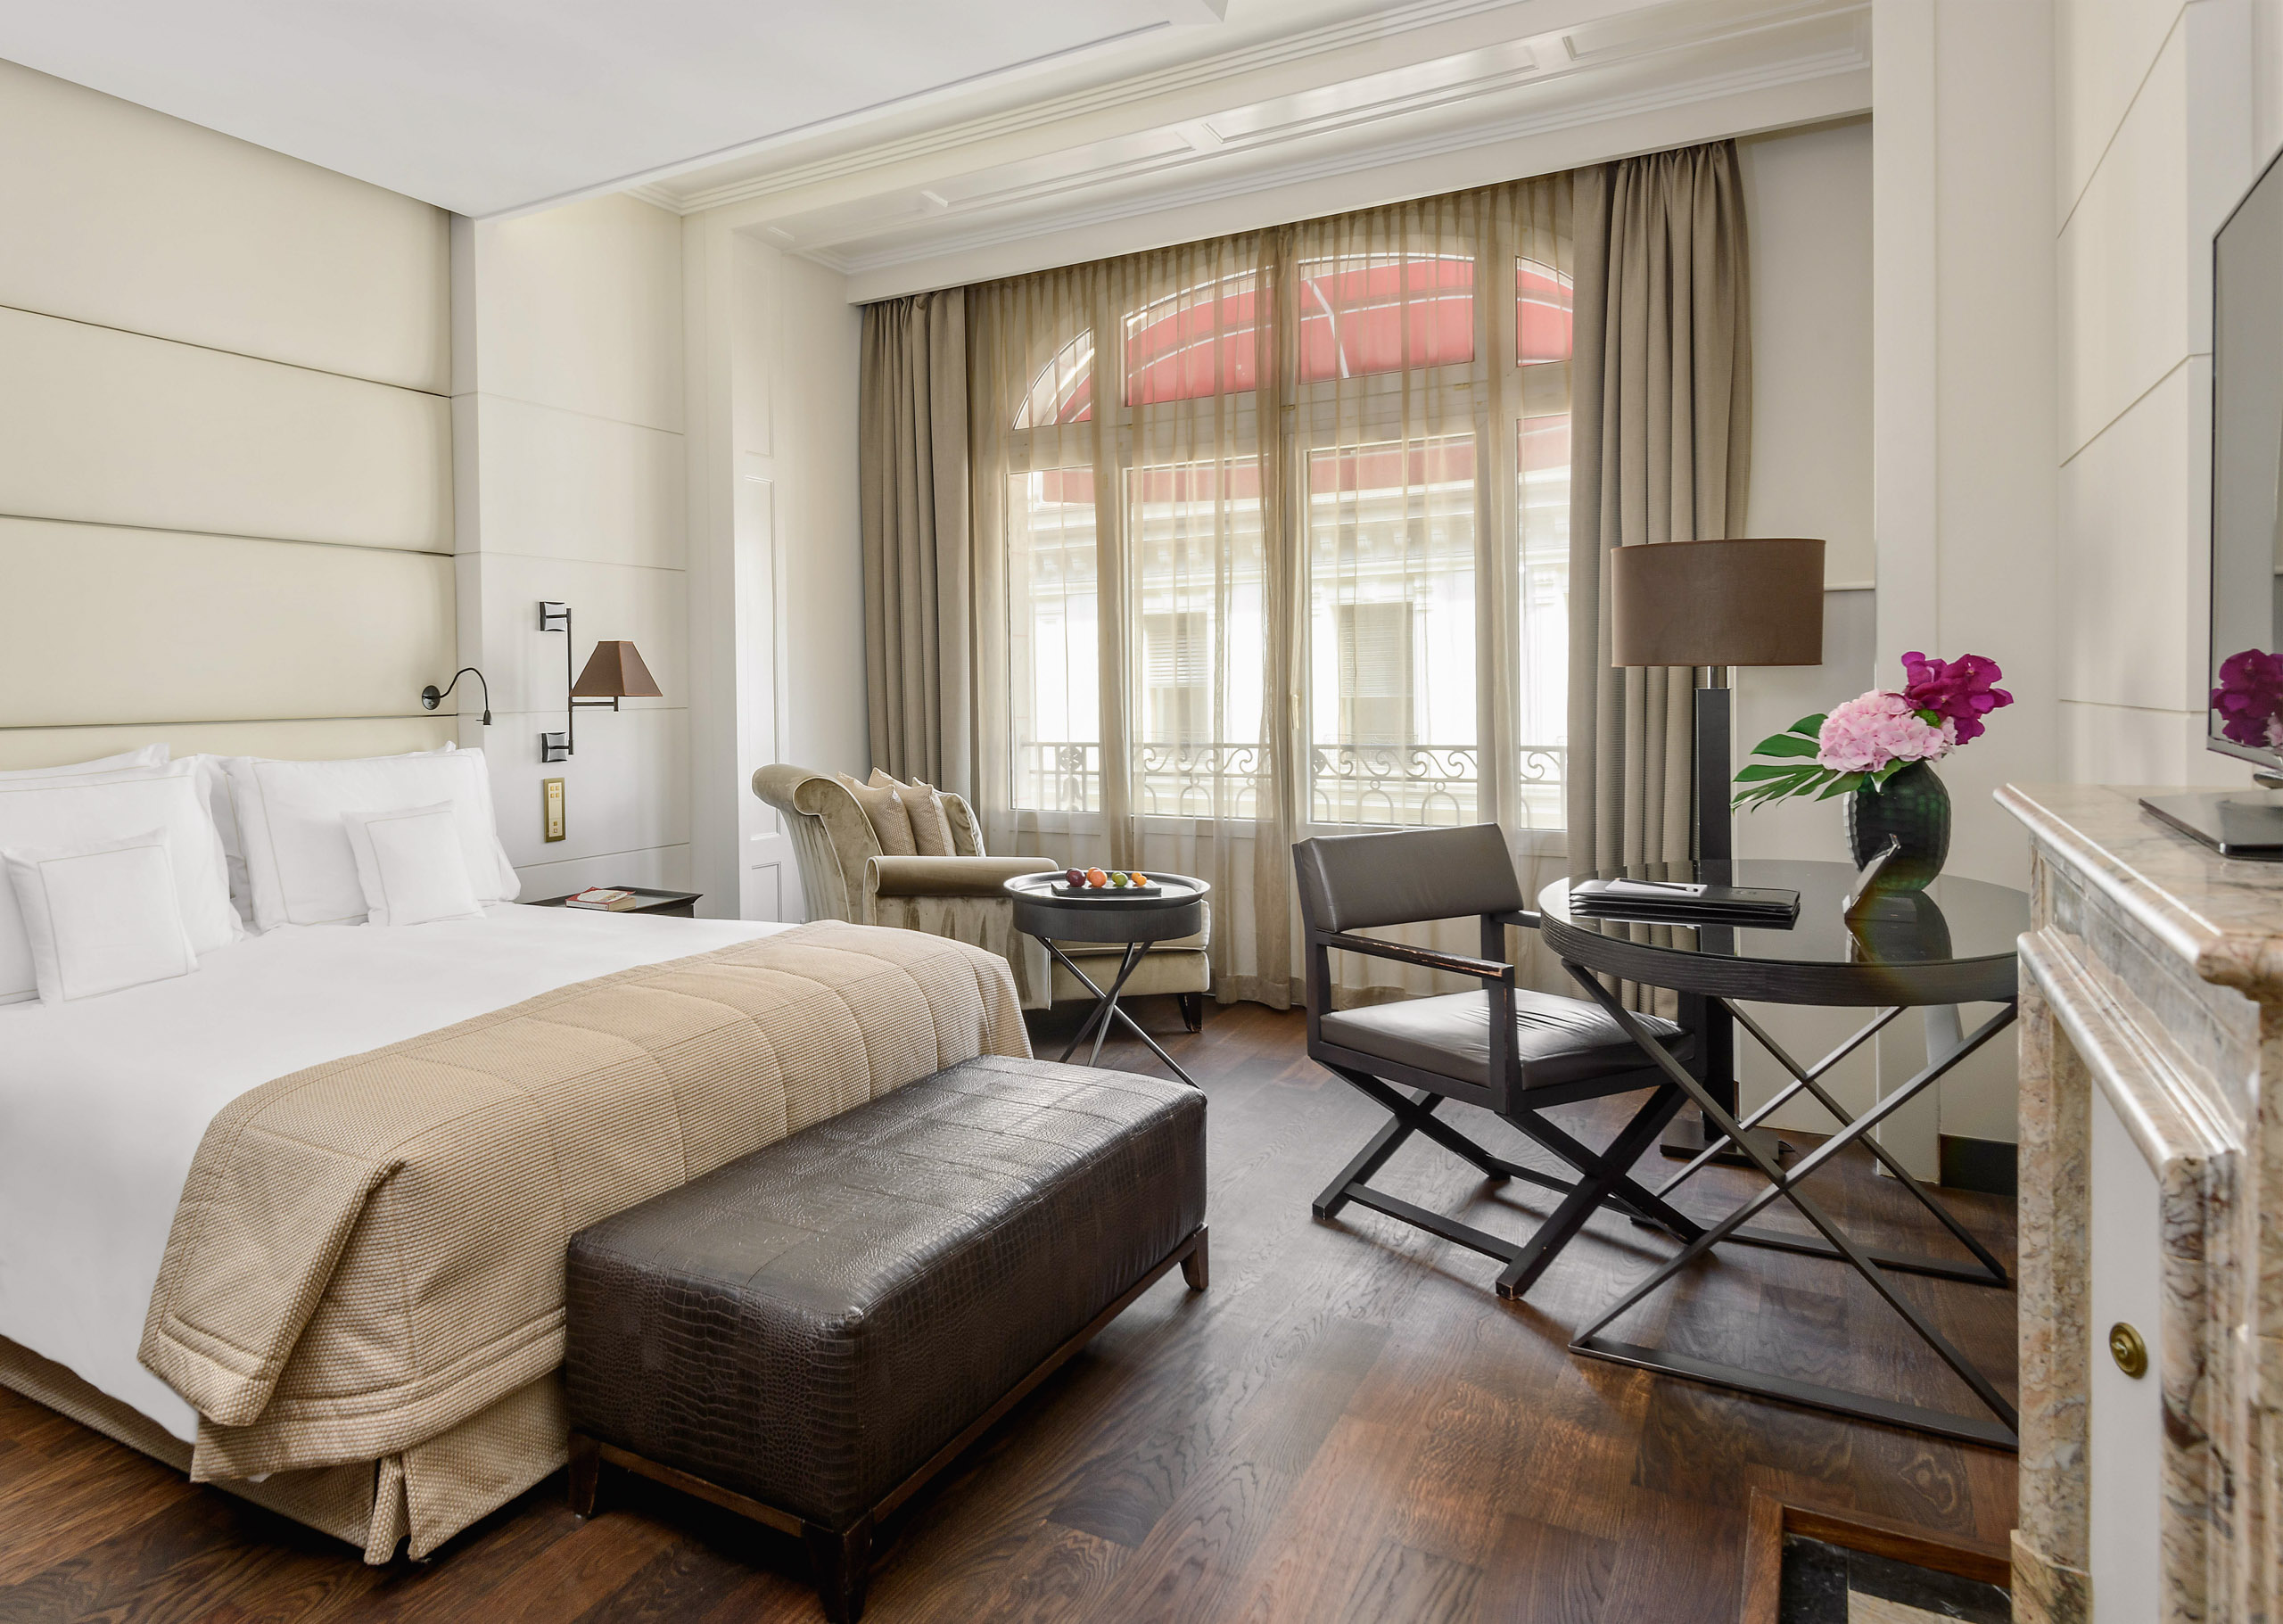 Lausanne Palace Hotel Premium City Room